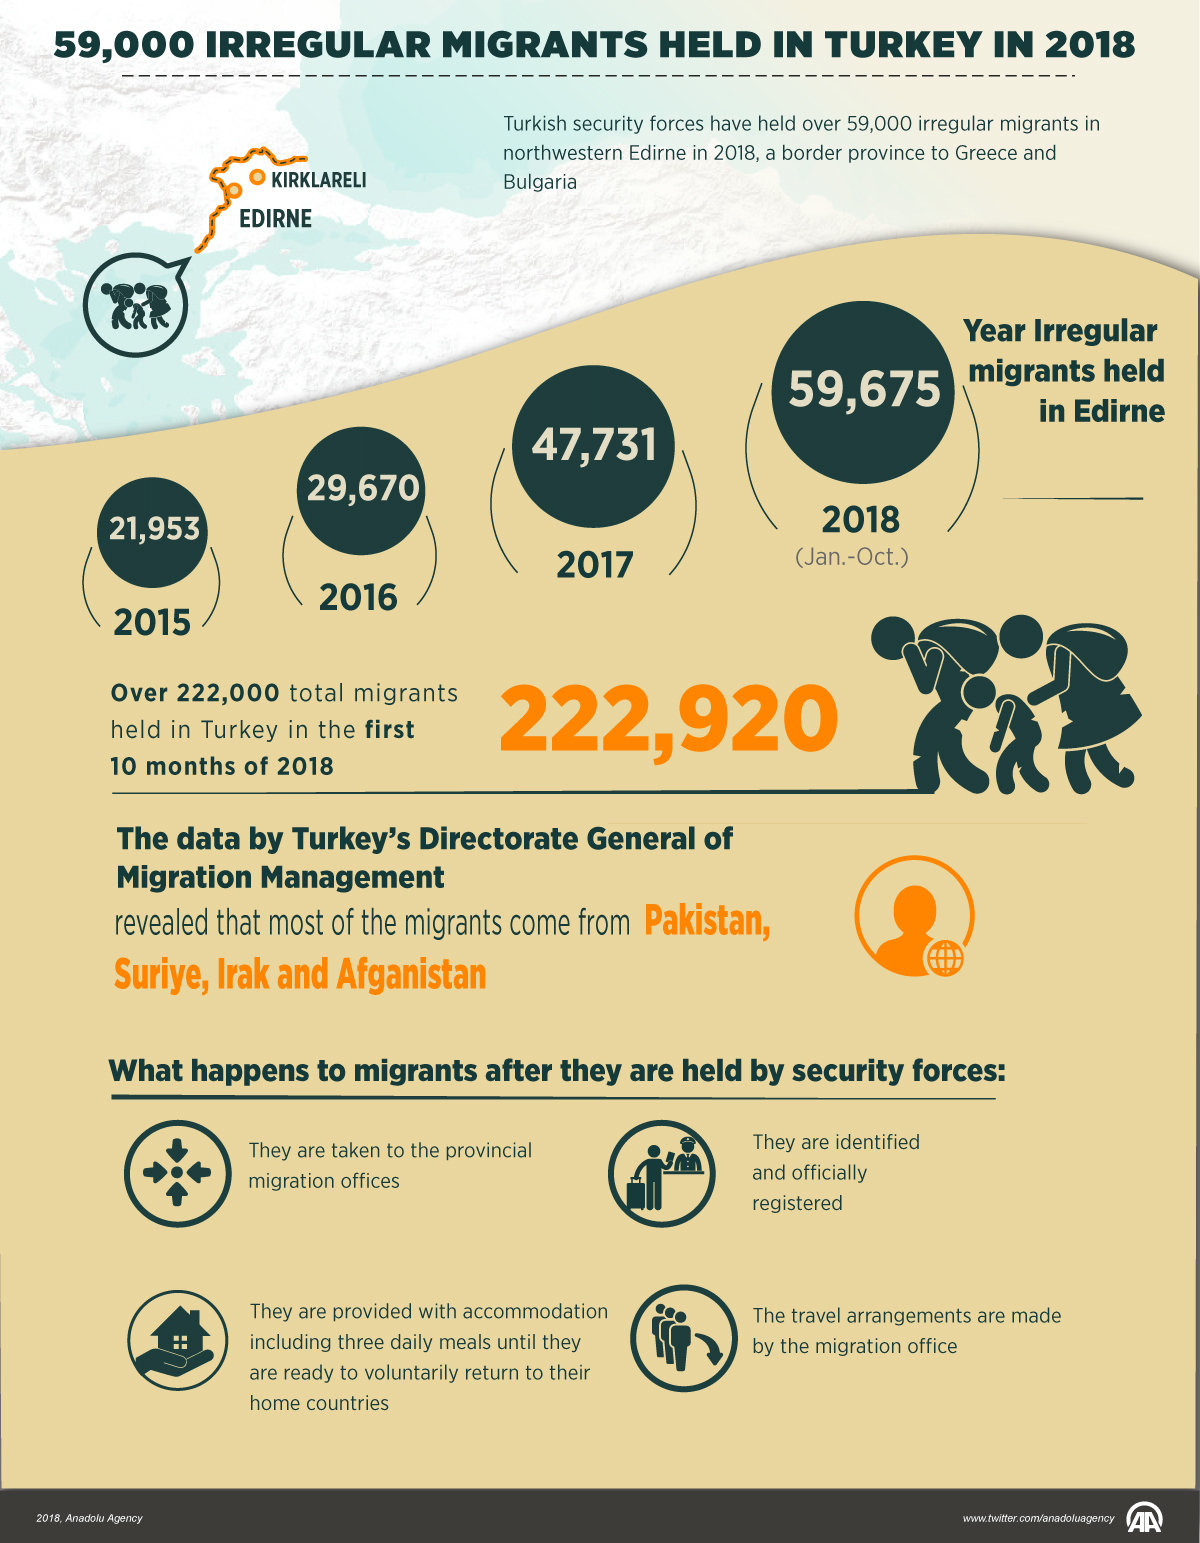 59,000+ irregular migrants held in NW Turkey in 2018